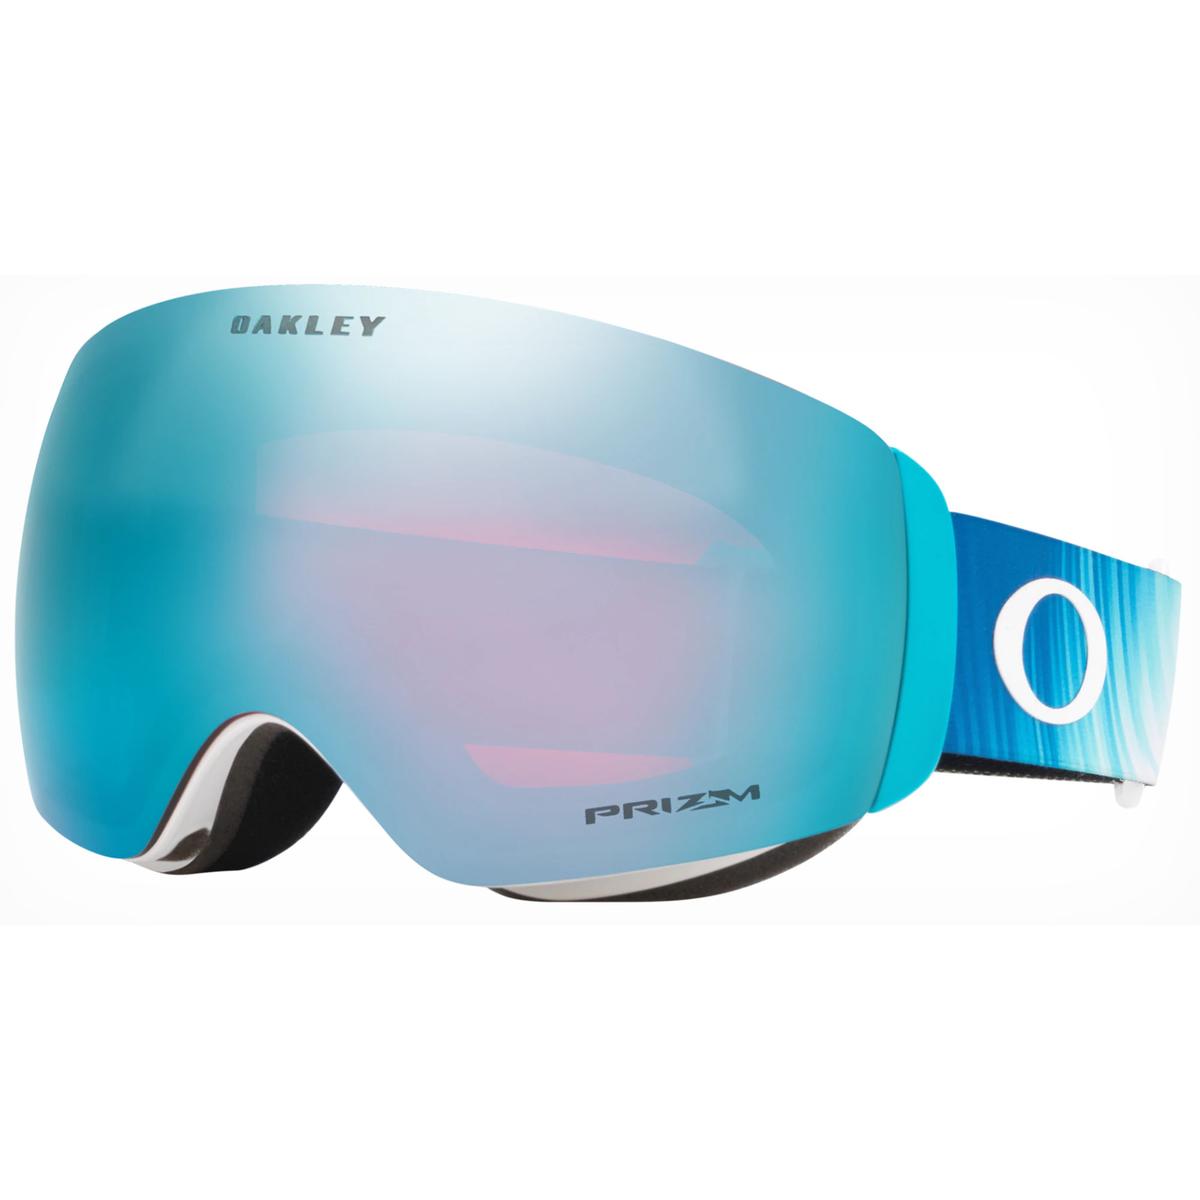 Oakley Women's Flightdeck XM Snow Goggles - Sun & Ski Sports